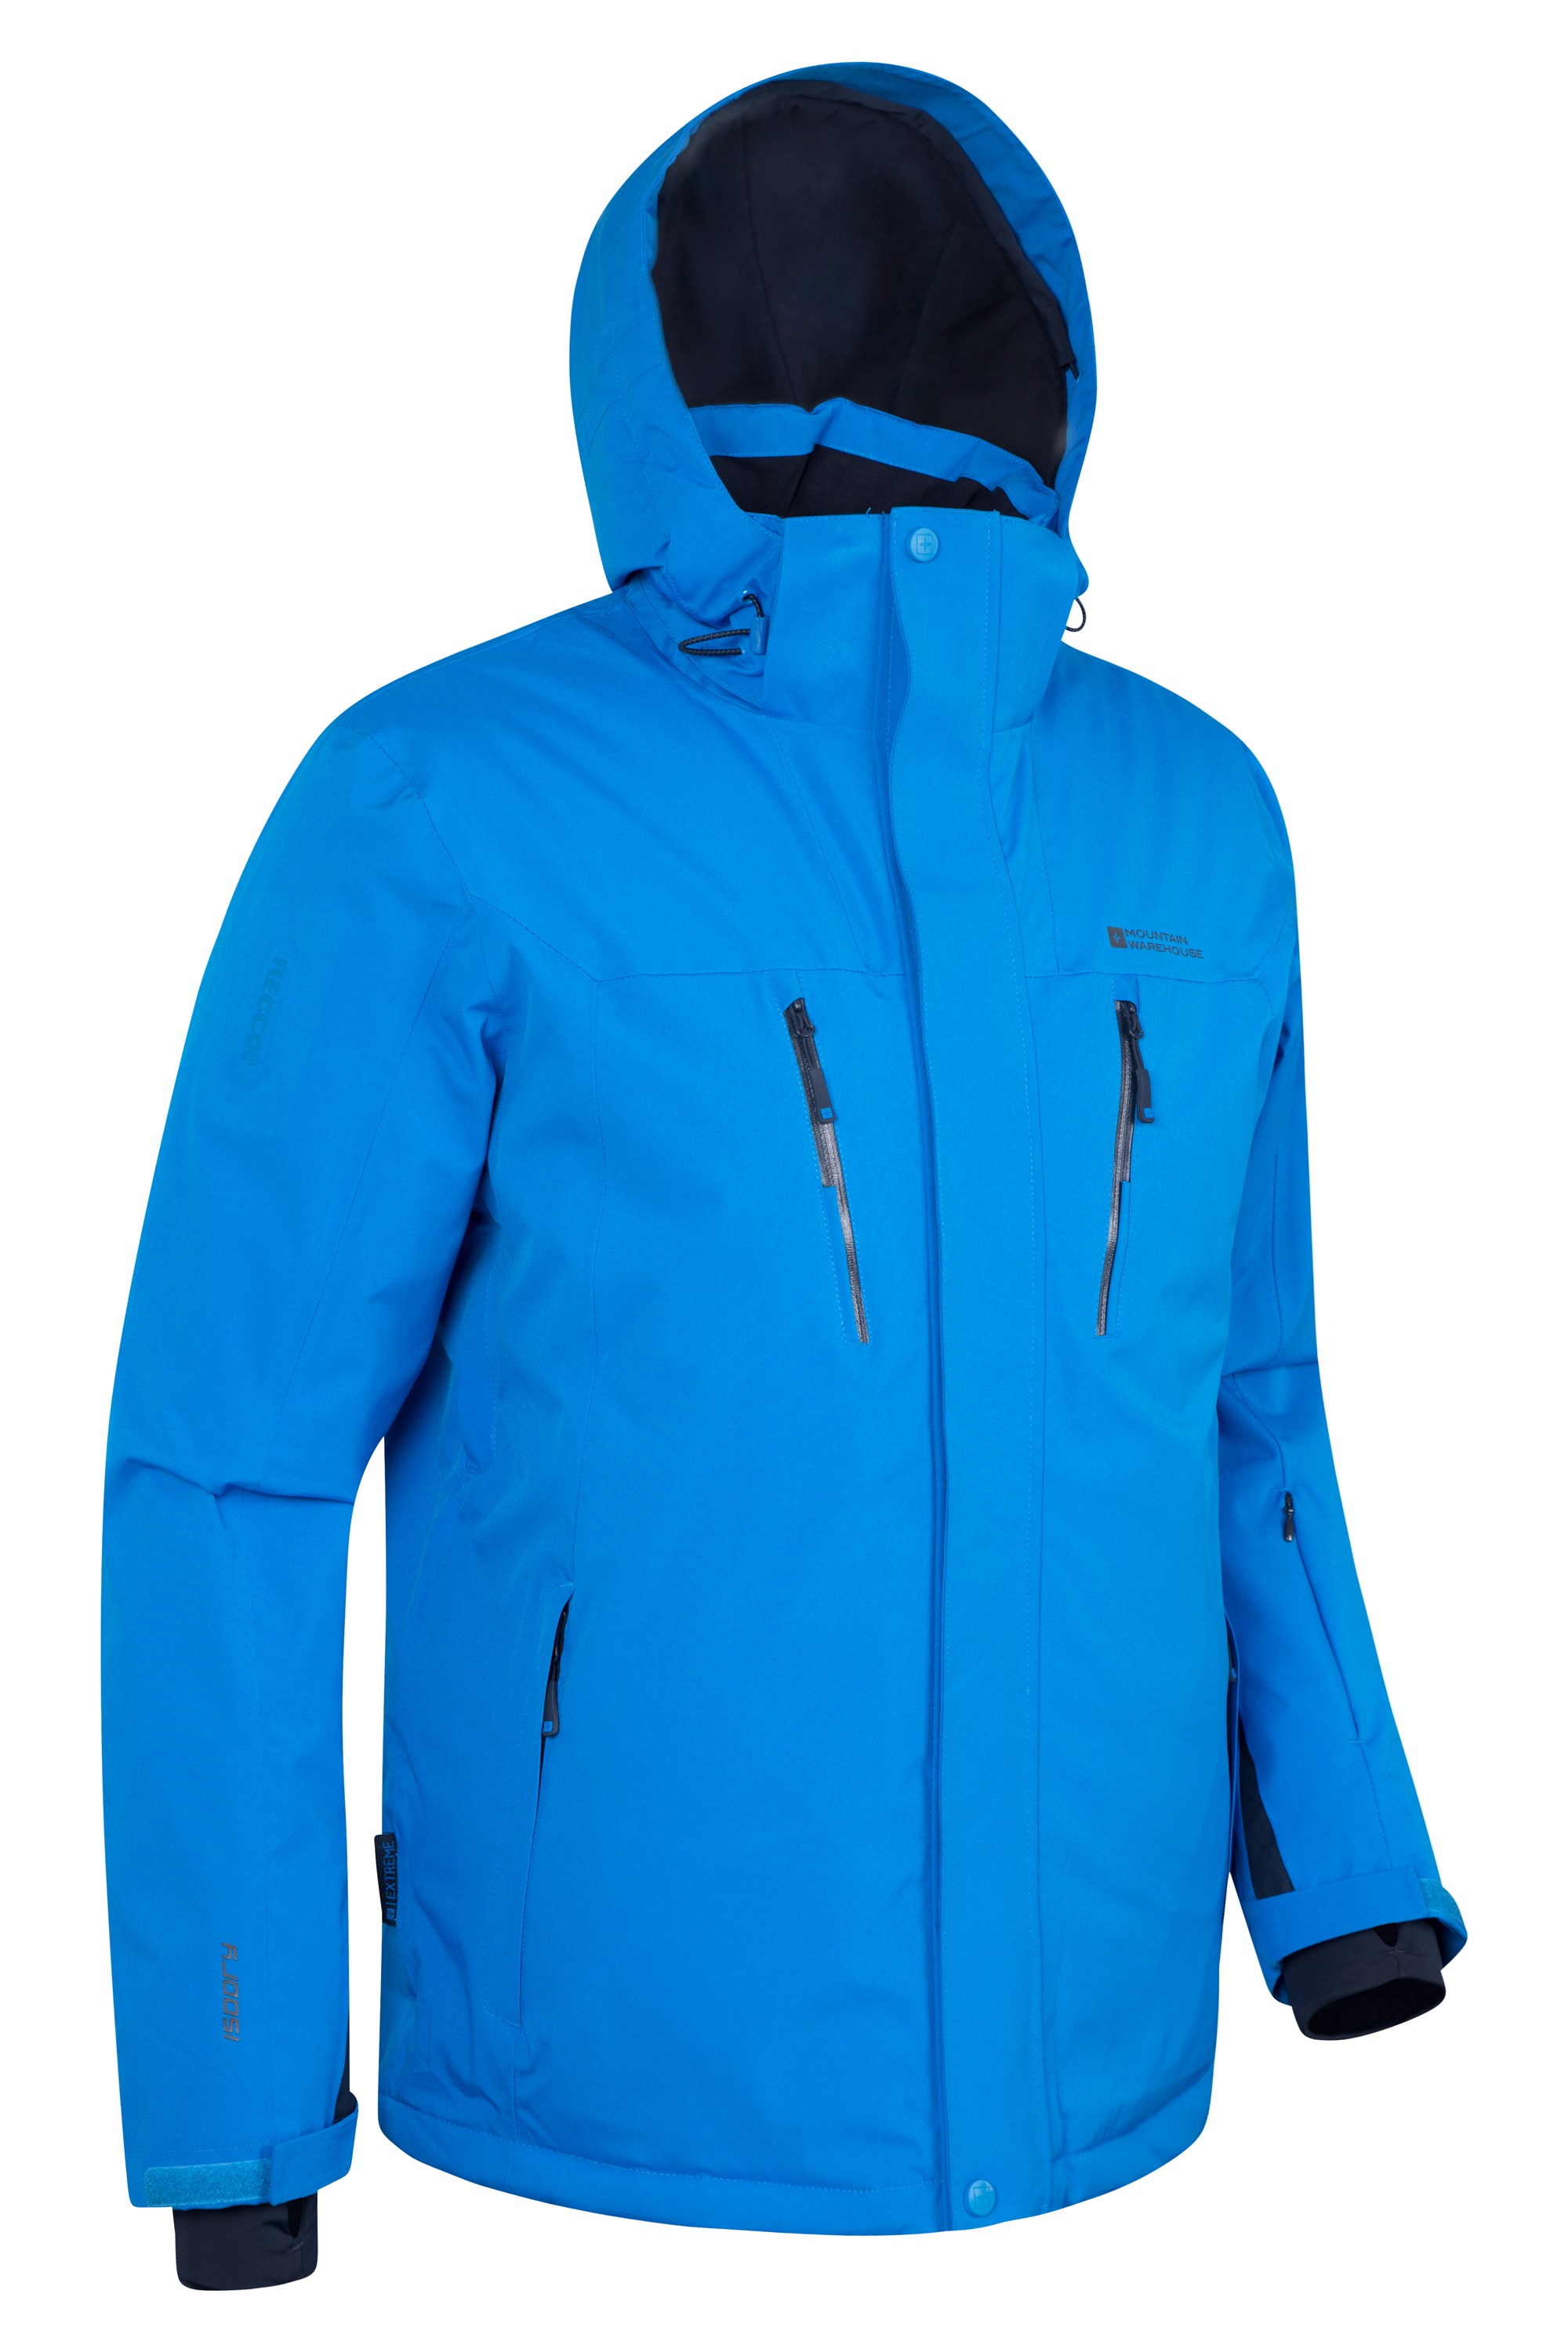 Zip Pocket Mountain Warehouse Galaxy Printed Waterproof Ski Jacket Snowskirt 